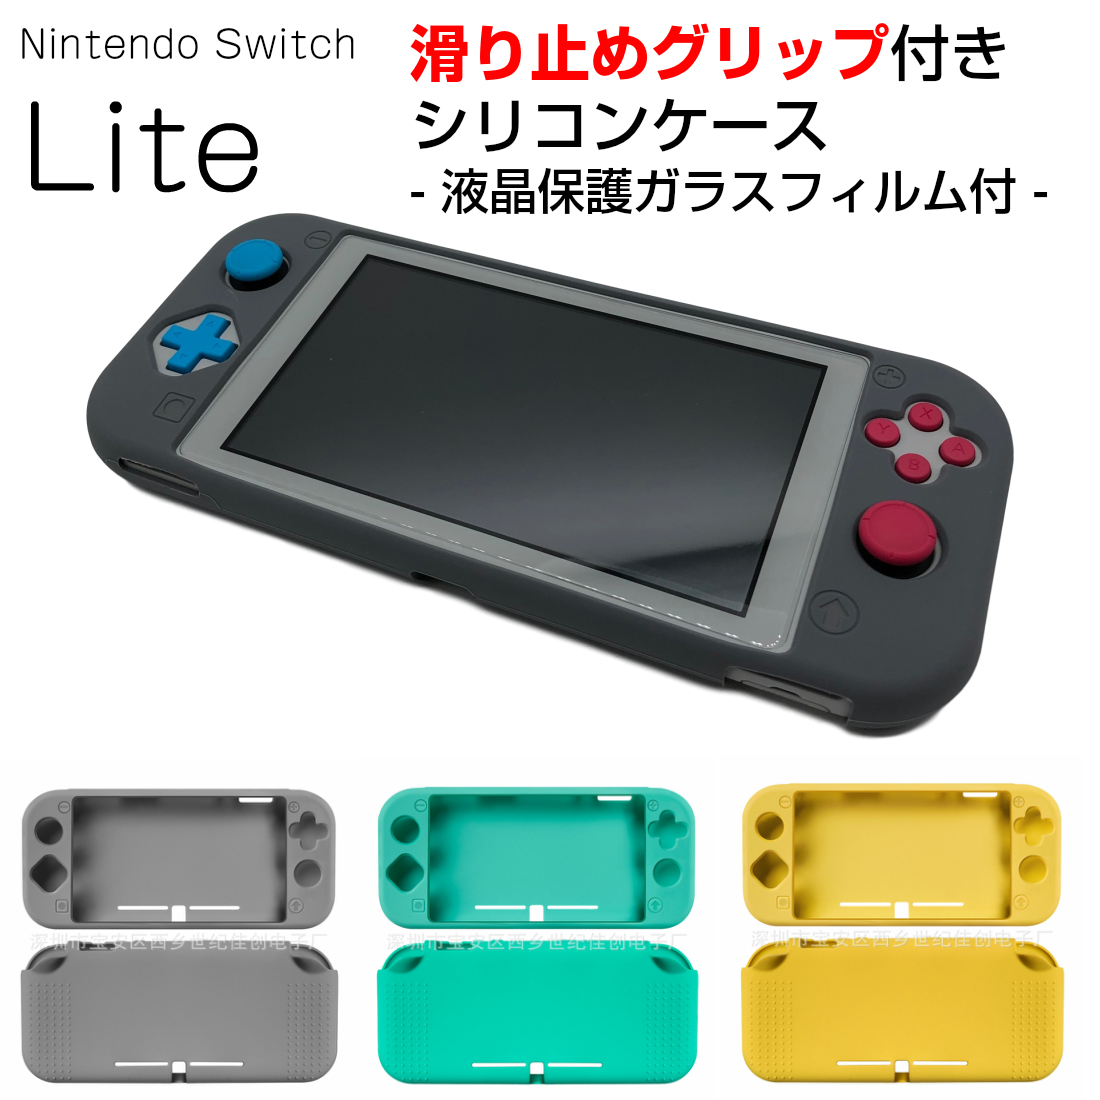 Nintendo Switch Lite グレー保護フィルム 保護ケース付-